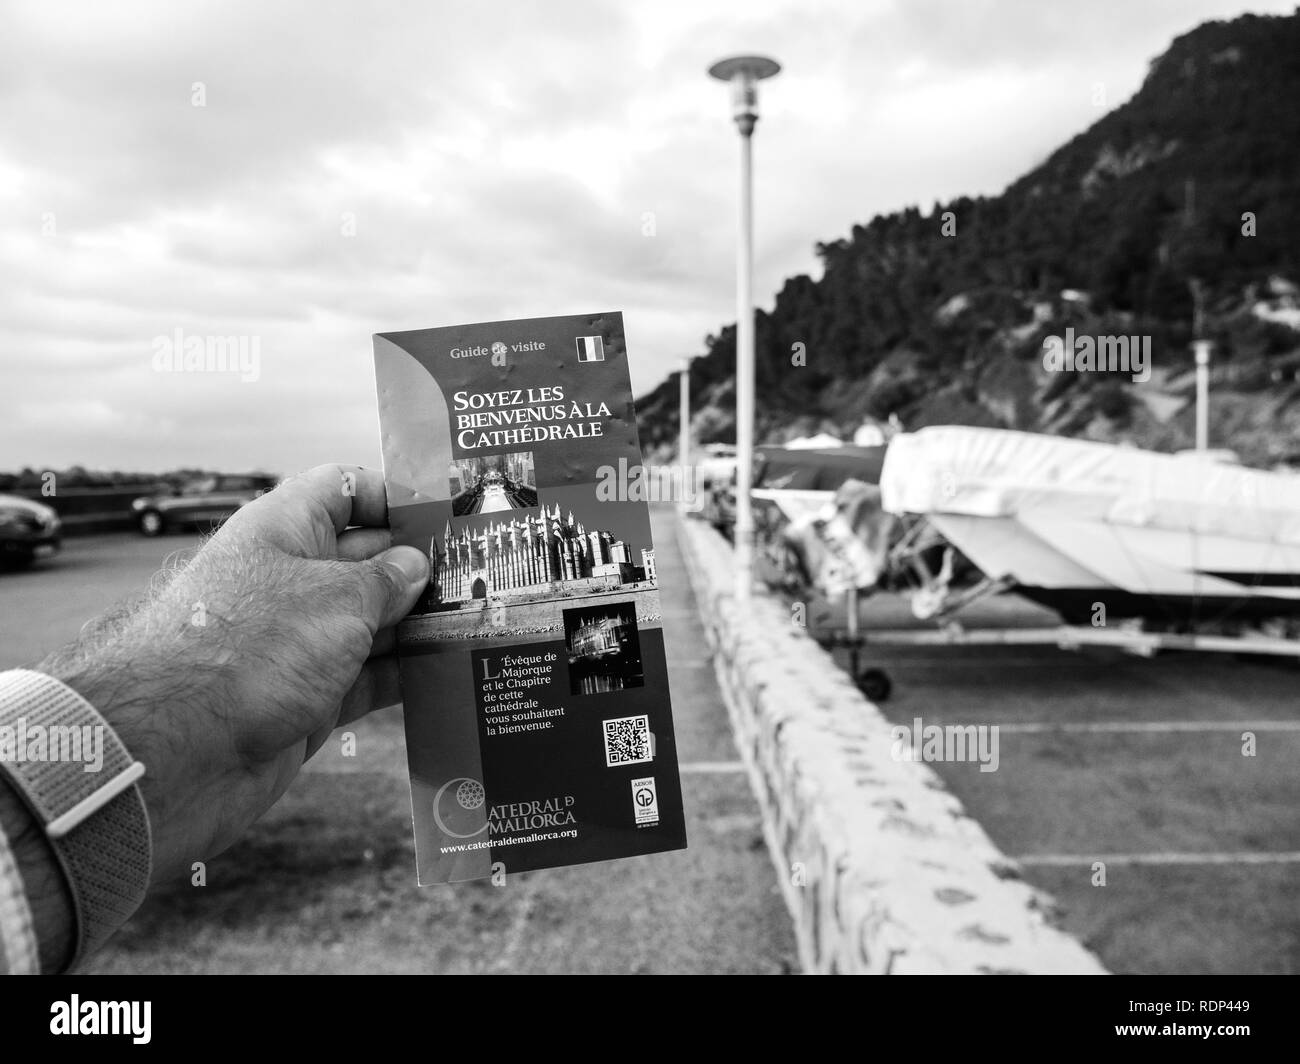 Port de Valldemosa, Palma de Malloca, Spain - May 10, 2018: Man holding pov the touristic guide of the Santa Maria of Palma Cathedral in the parking of Port de Valldemosa - black and white Stock Photo